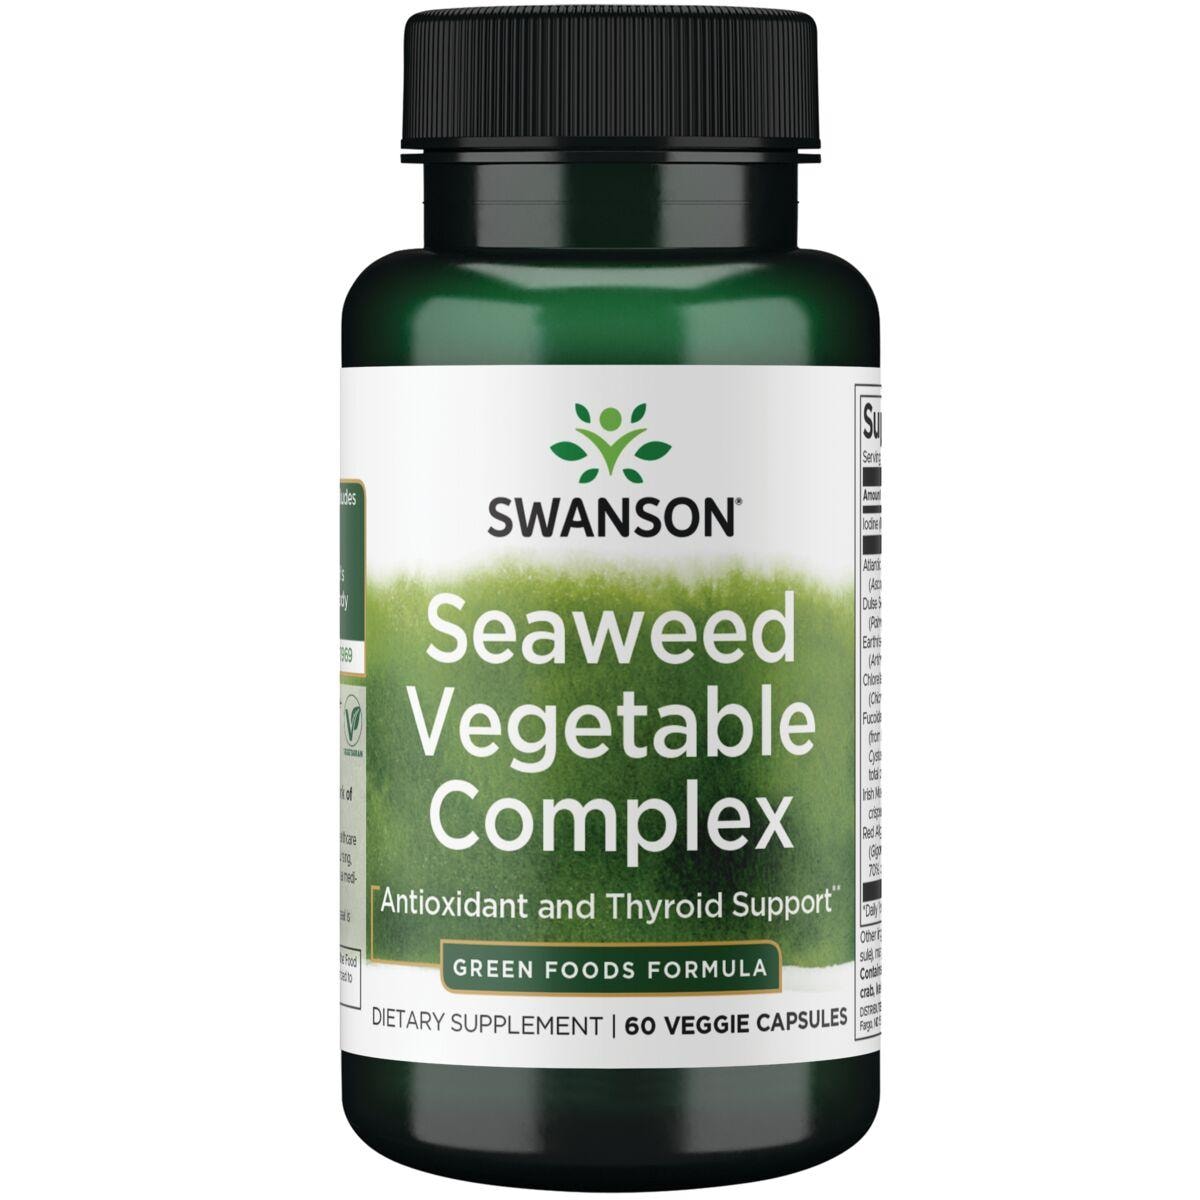 Swanson GreenFoods Formulas Seaweed Vegetable Complex Supplement Vitamin | 60 Veg Caps